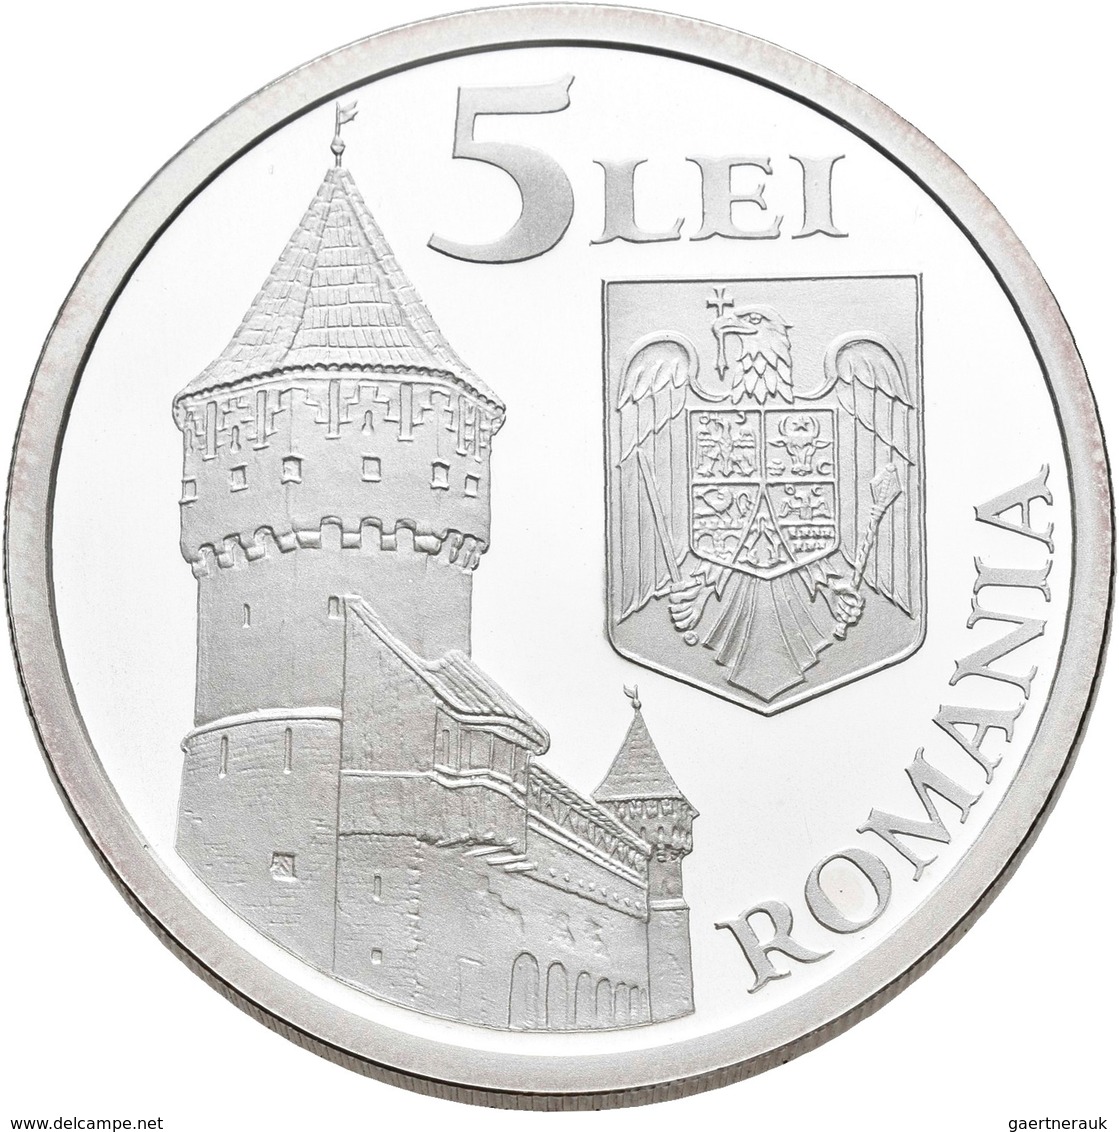 Rumänien: 5 Lei 2007, Sibiu - Kulturhauptstadt Europas. KM# 217. 31,103 G (1 OZ), 999/1000 Silber. A - Romania